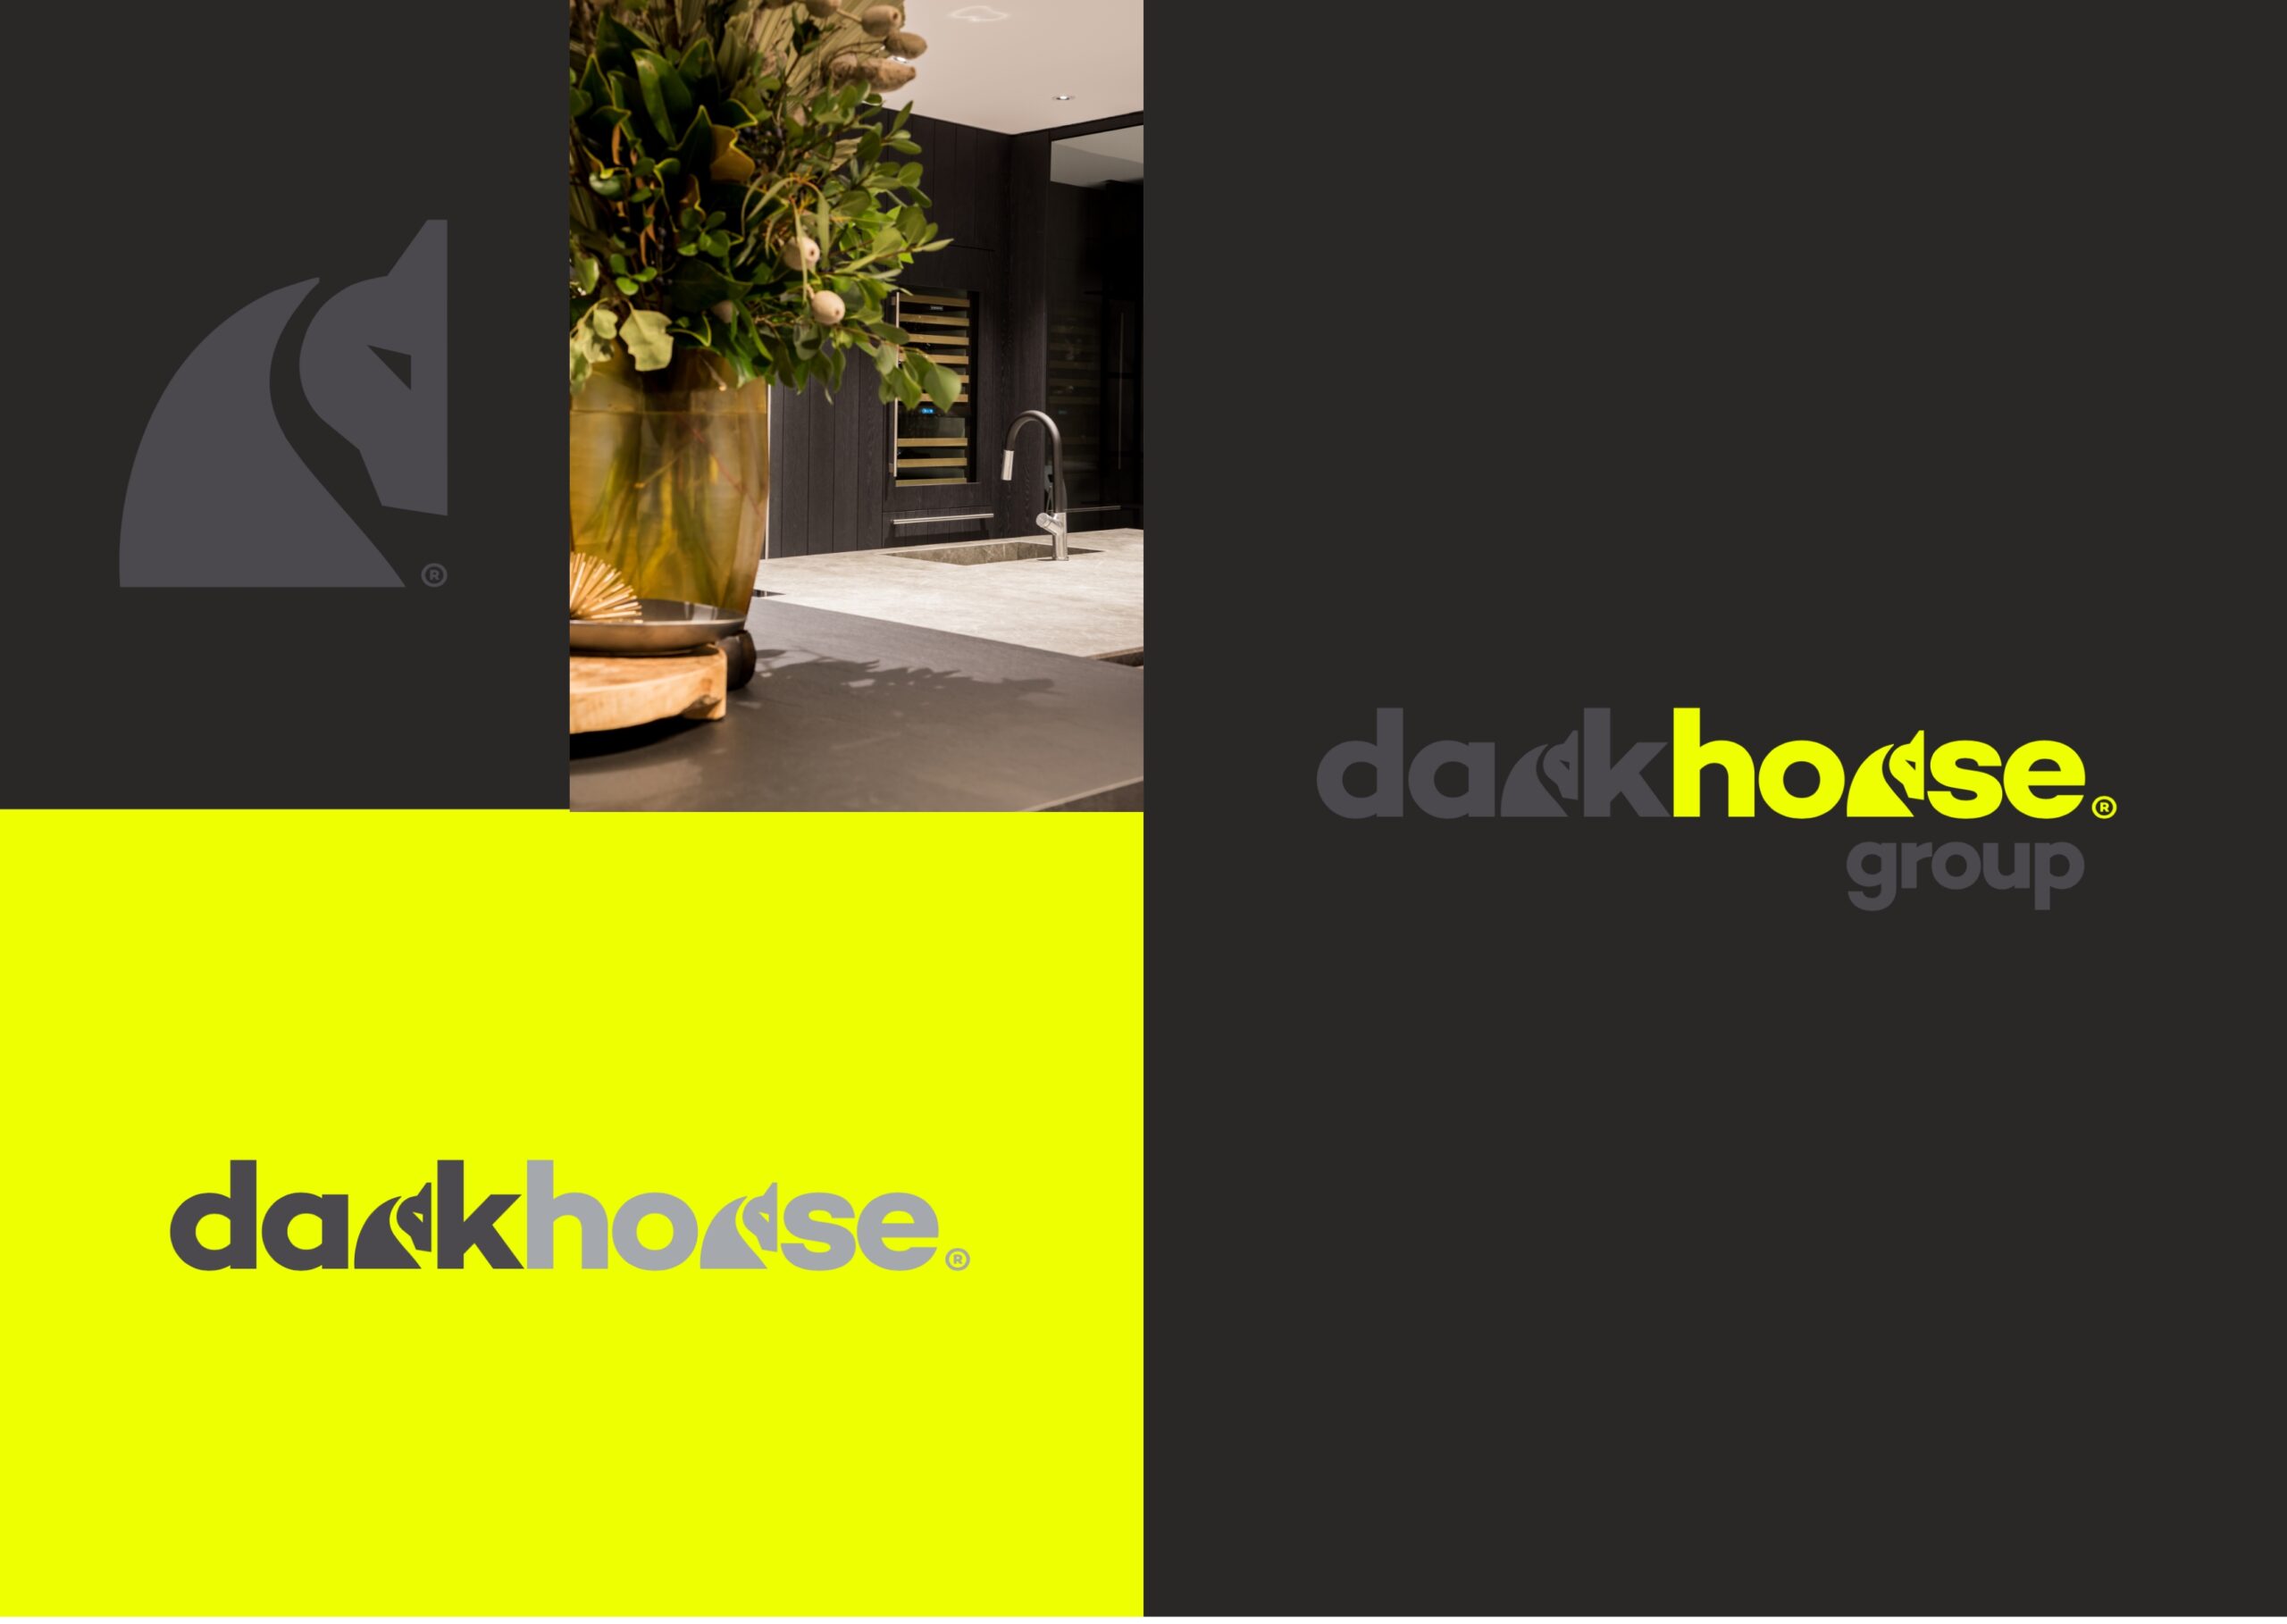 Darkhorse Branding, Signage & Graphic Design Development by TL Design Co.